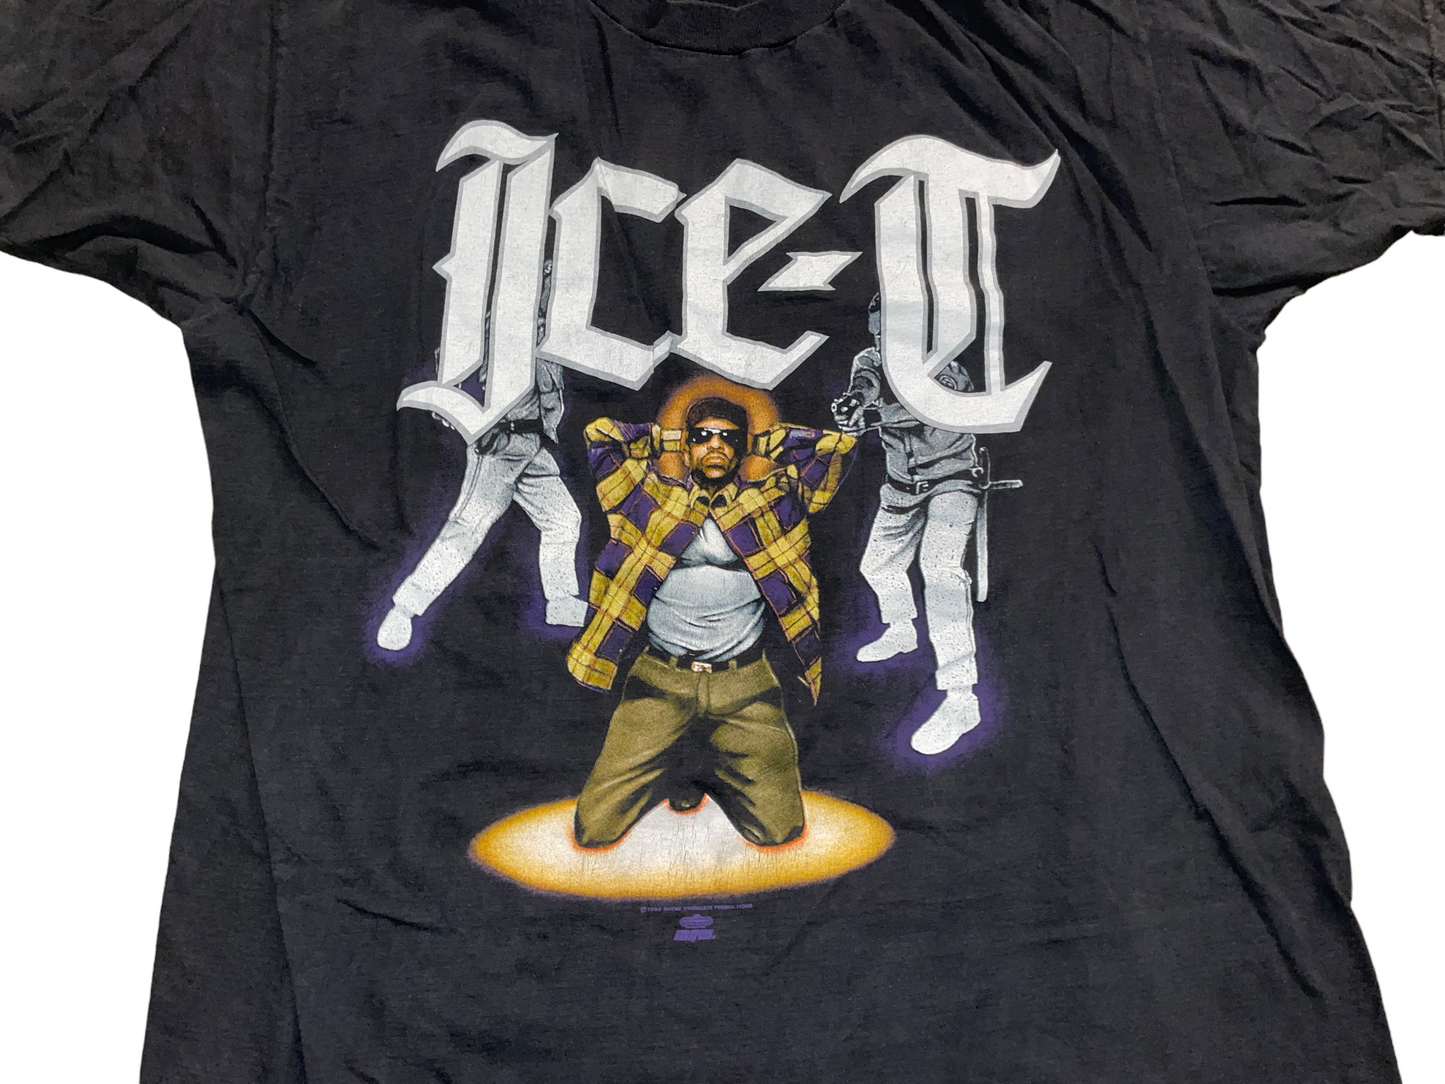 Vintage 1992 Ice-T Shirt